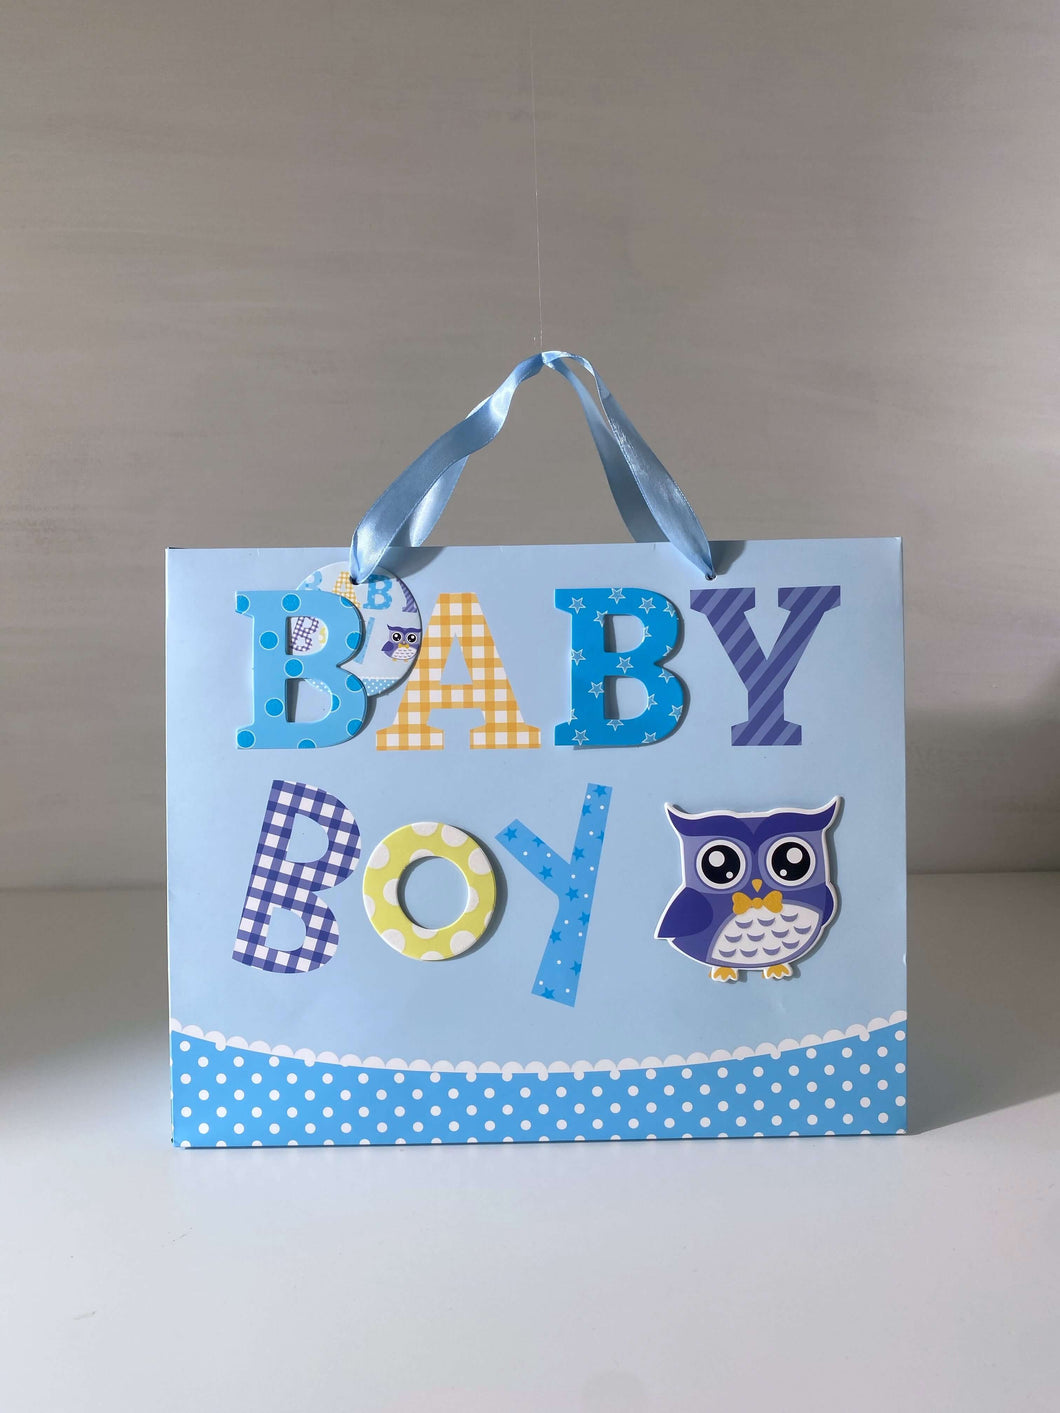 Baby Boy Gift Bag